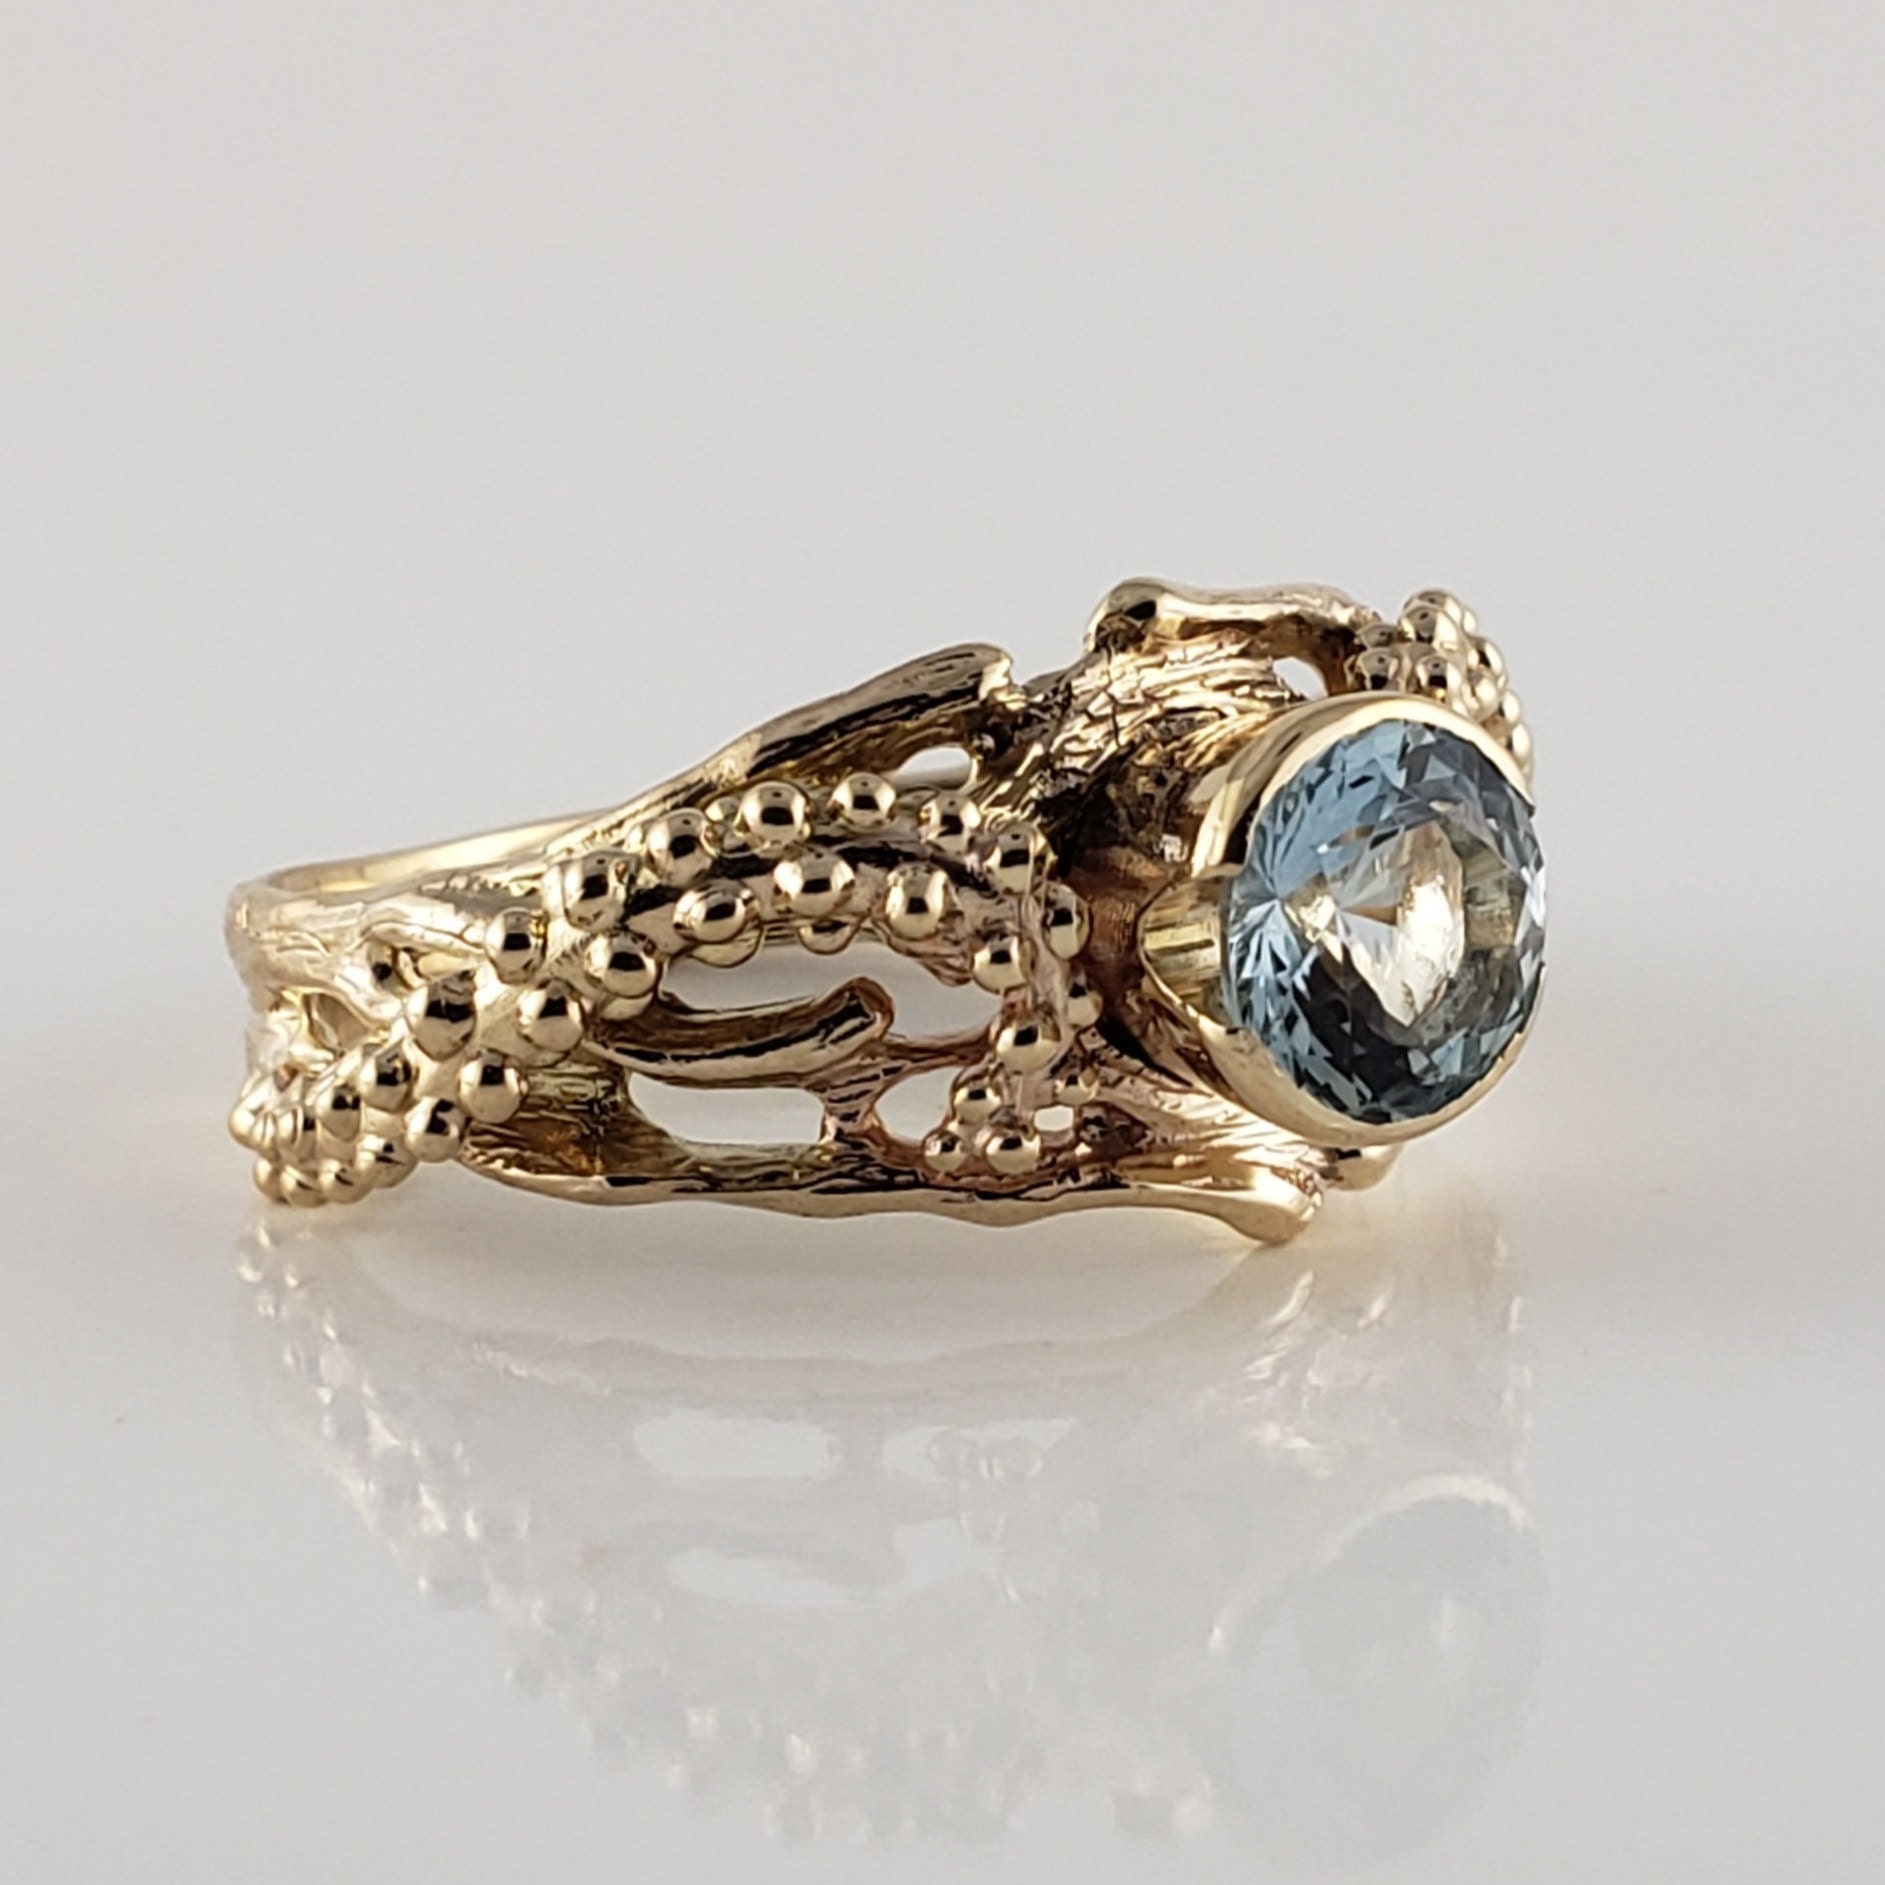 Aliens inspired elegant ring diamonds and topaz jewelry